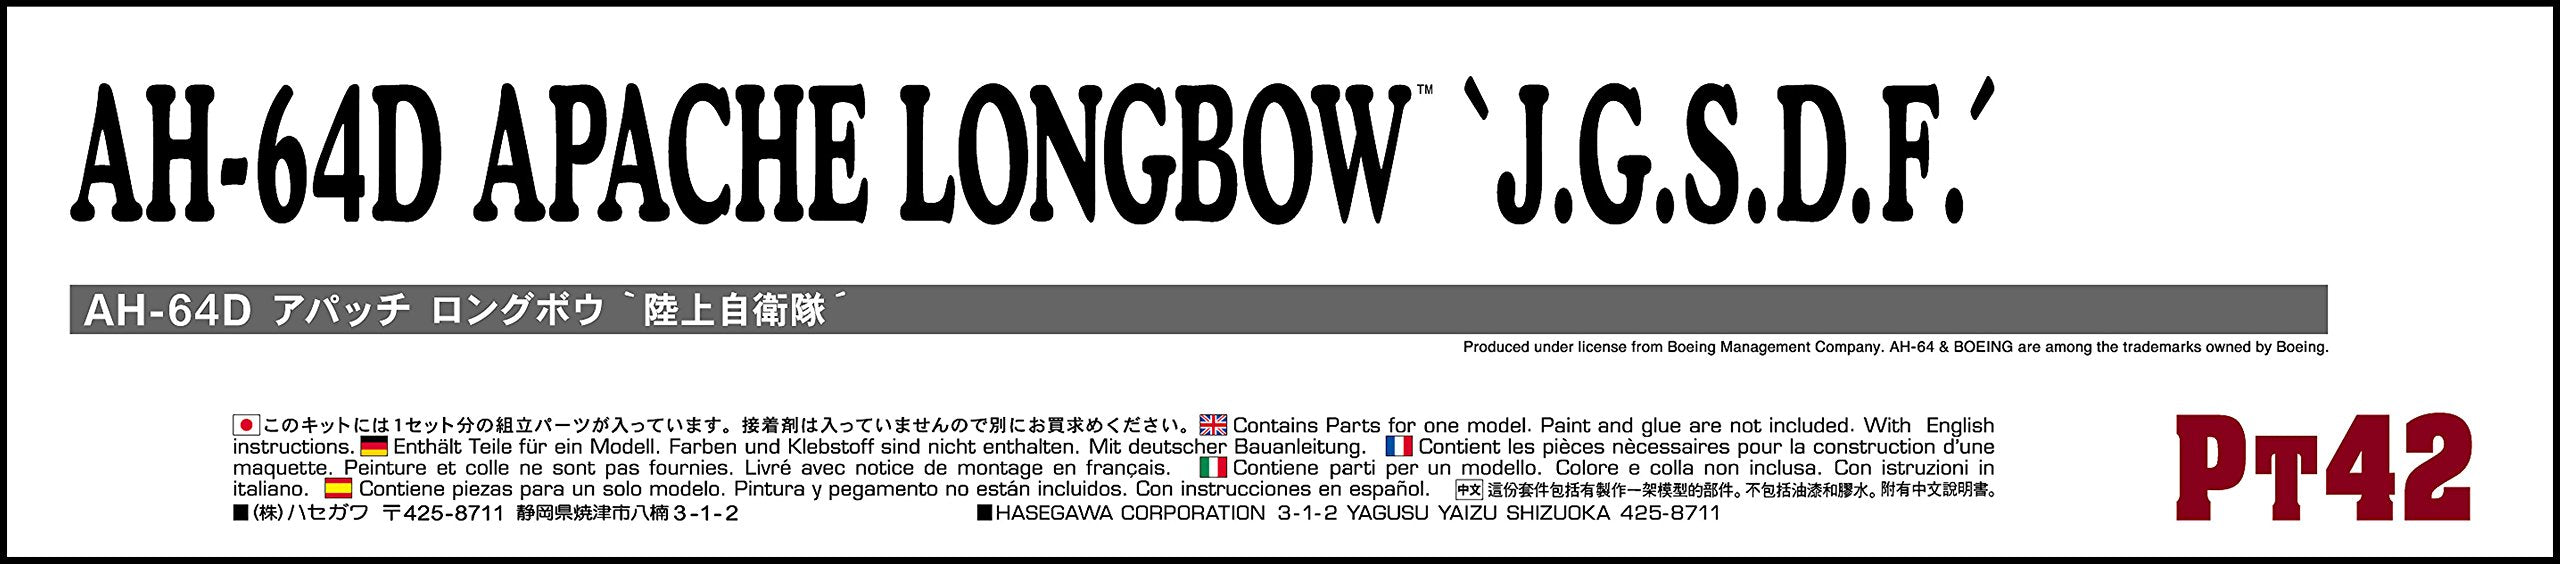 HASEGAWA 1/48 Ah-64D Apache Longbow JGSDF Modèle en plastique